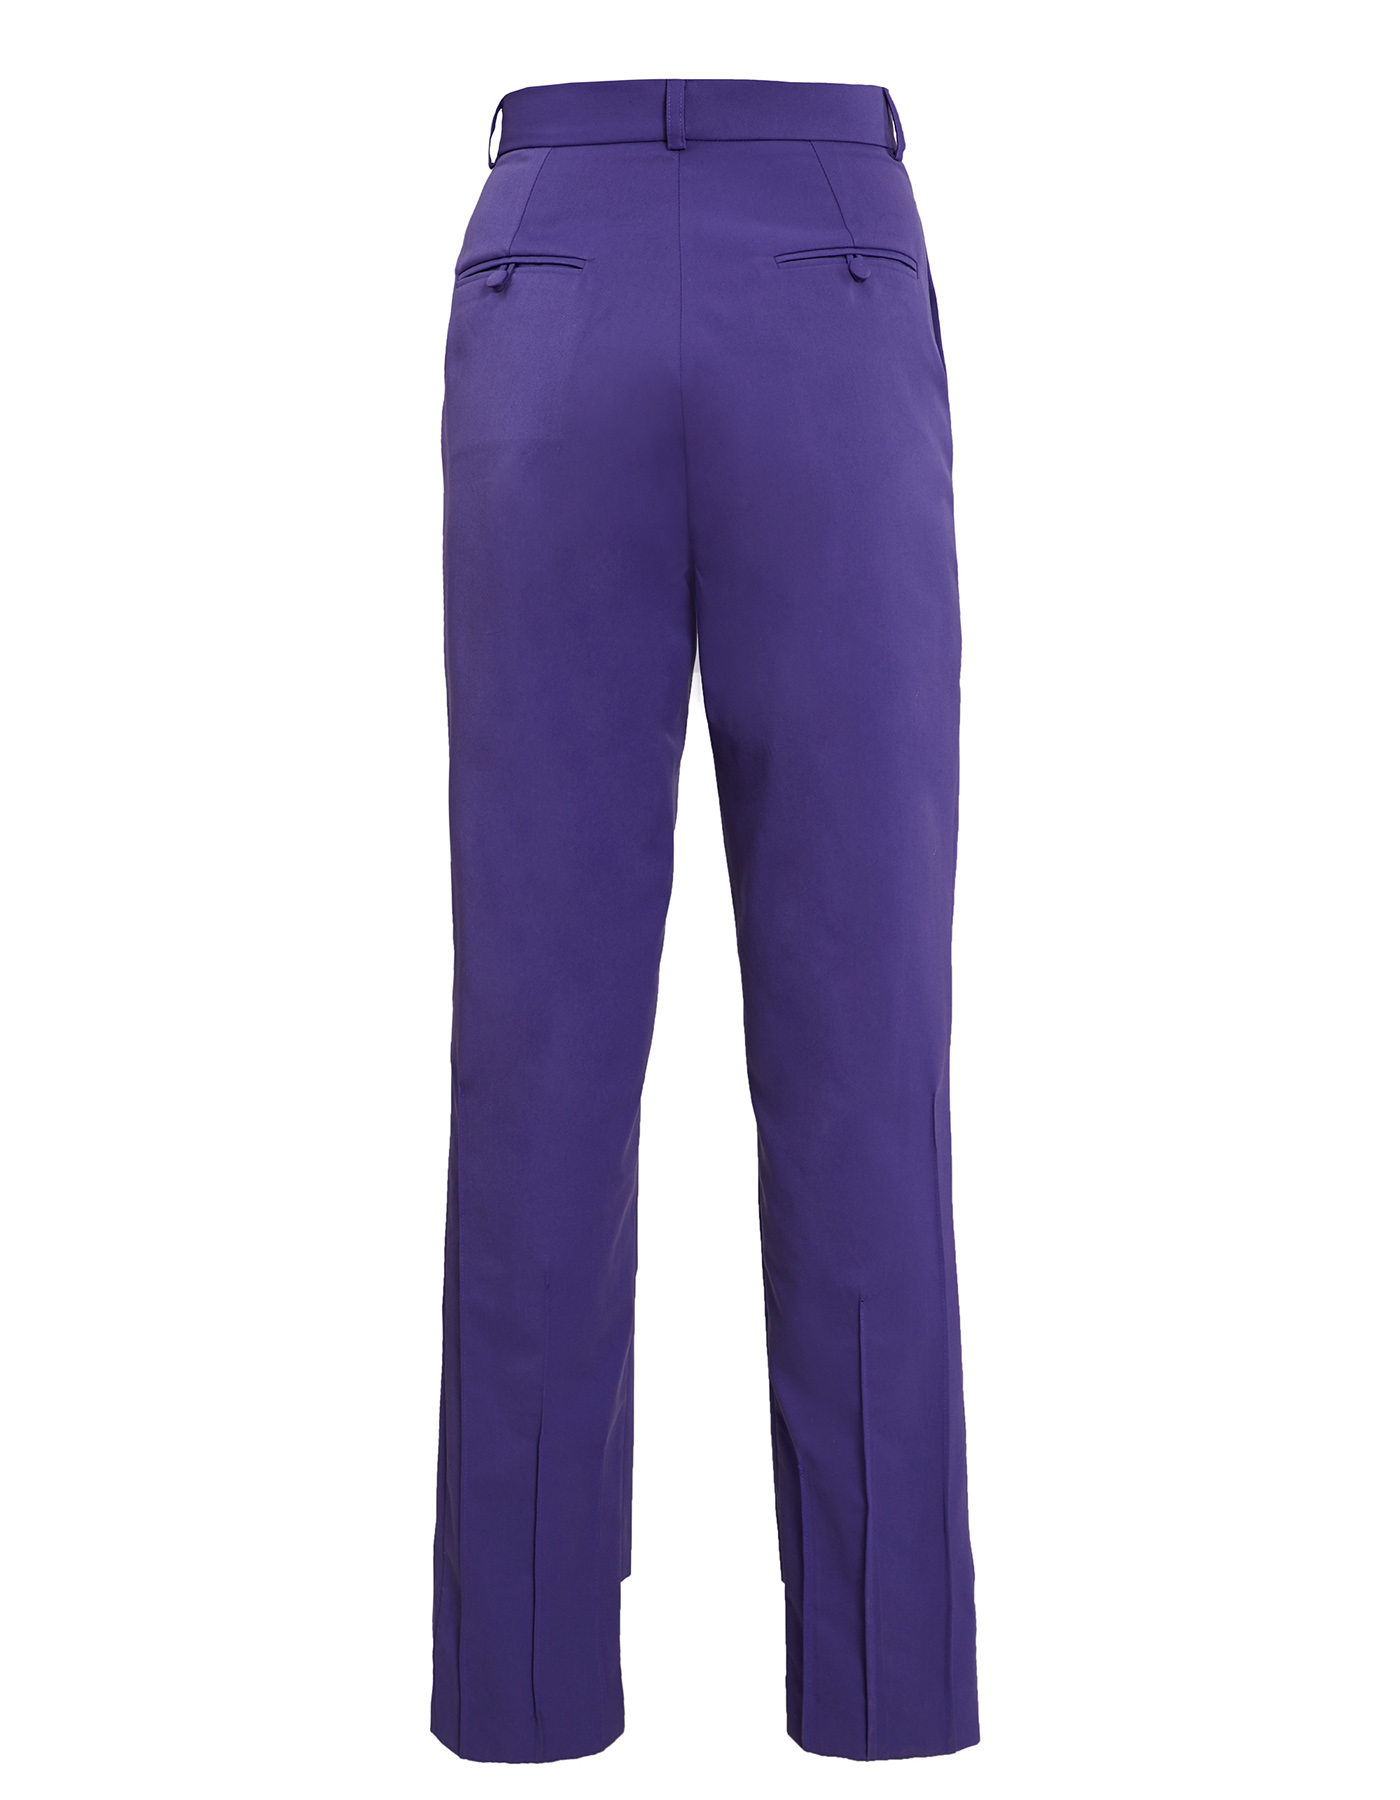 Purple pants 